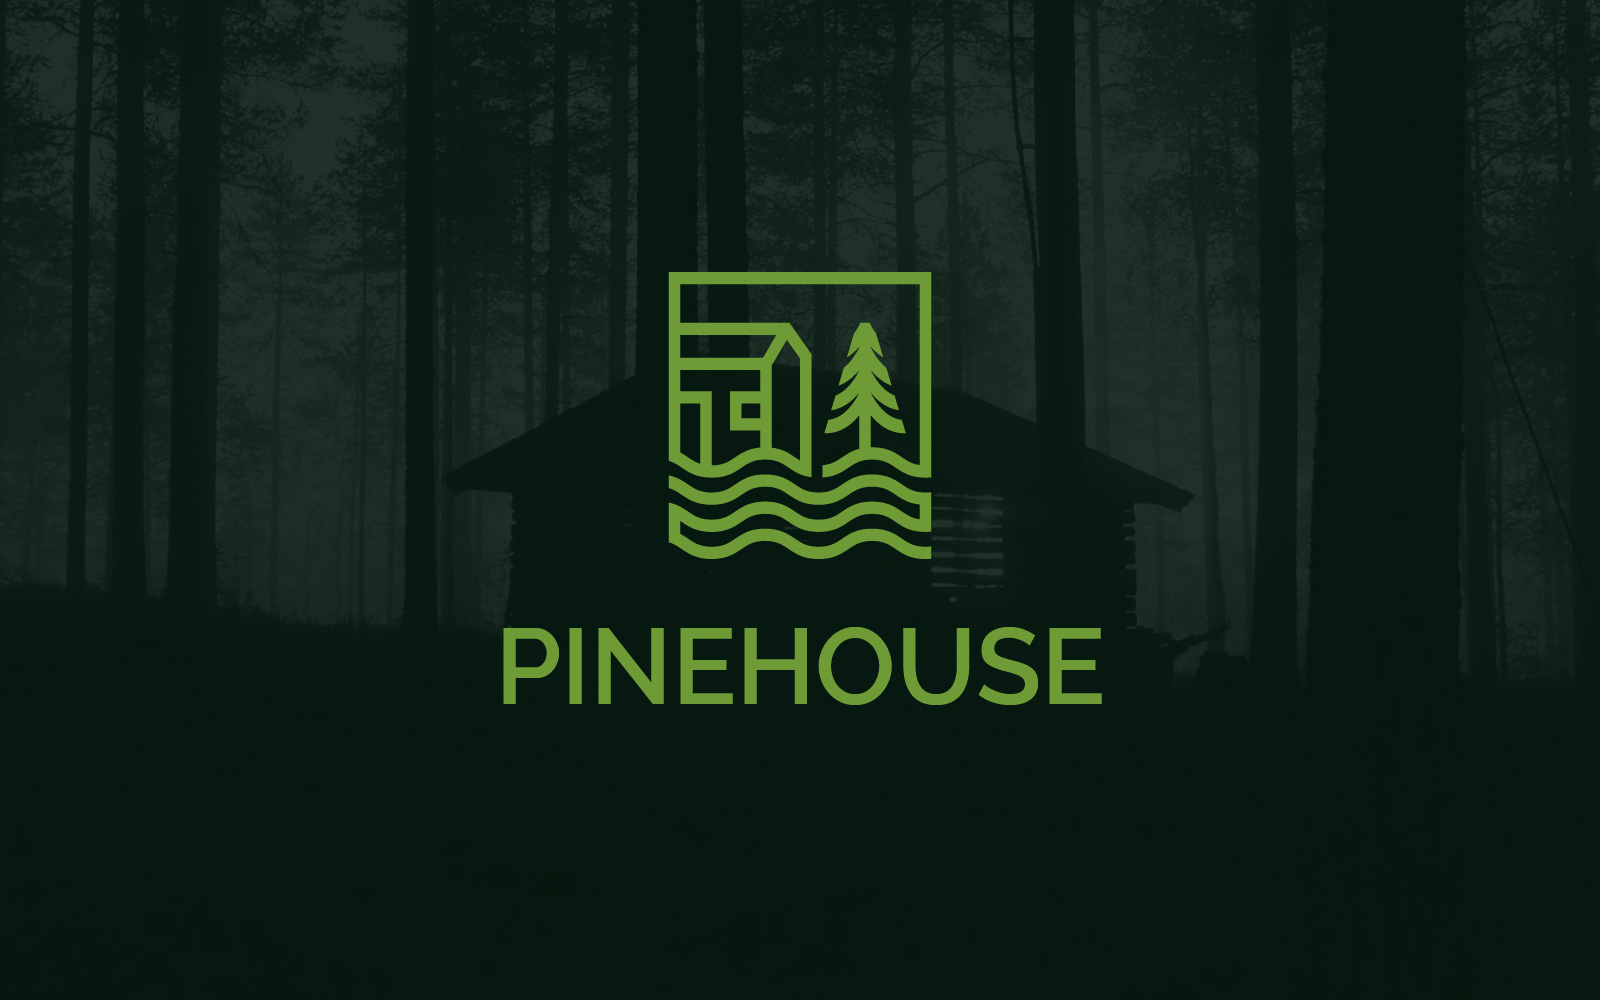 Pine house camping adventure logo design template